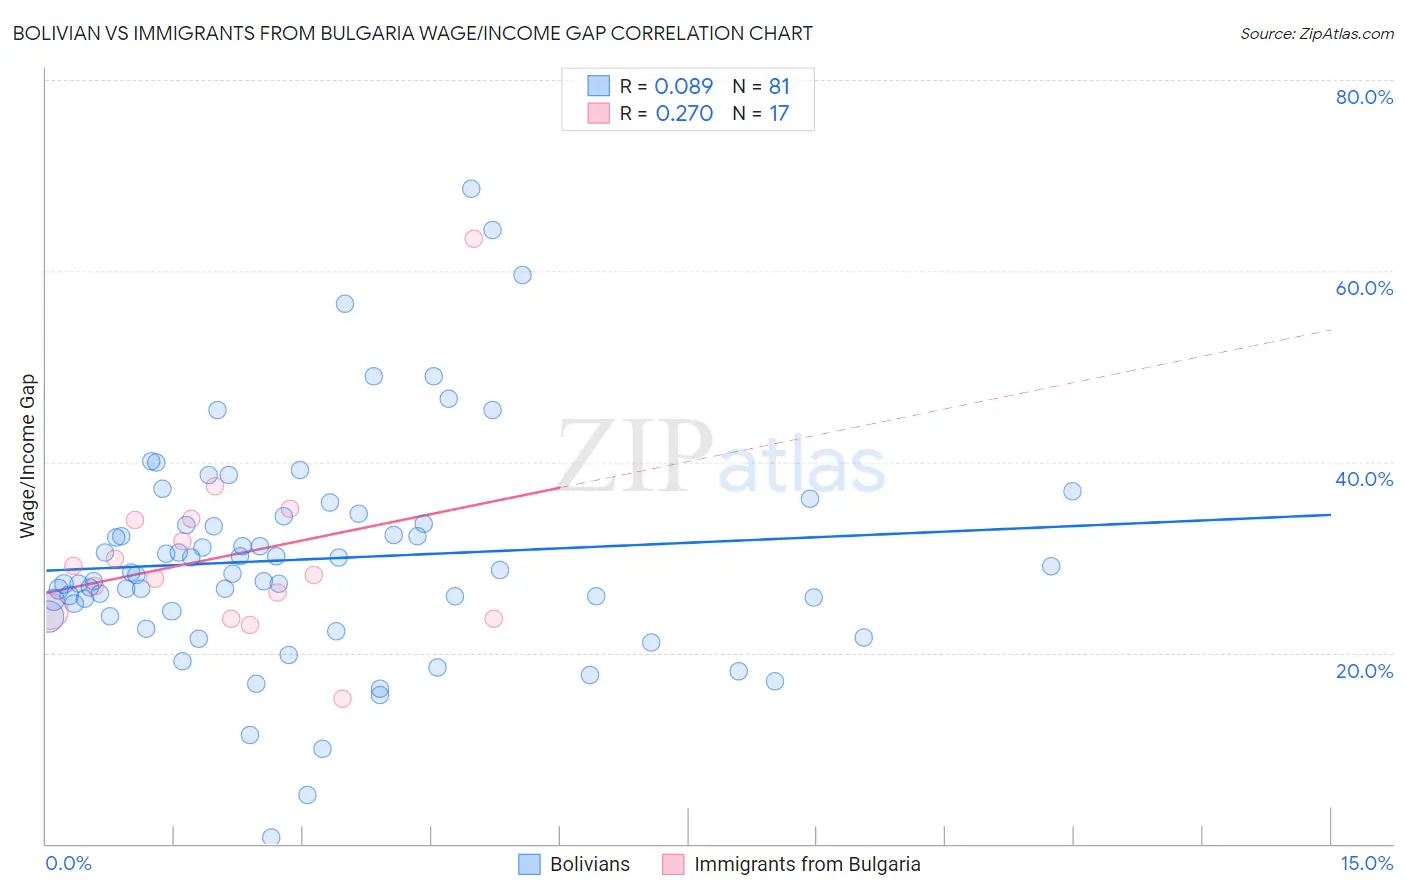 Bolivian vs Immigrants from Bulgaria Wage/Income Gap